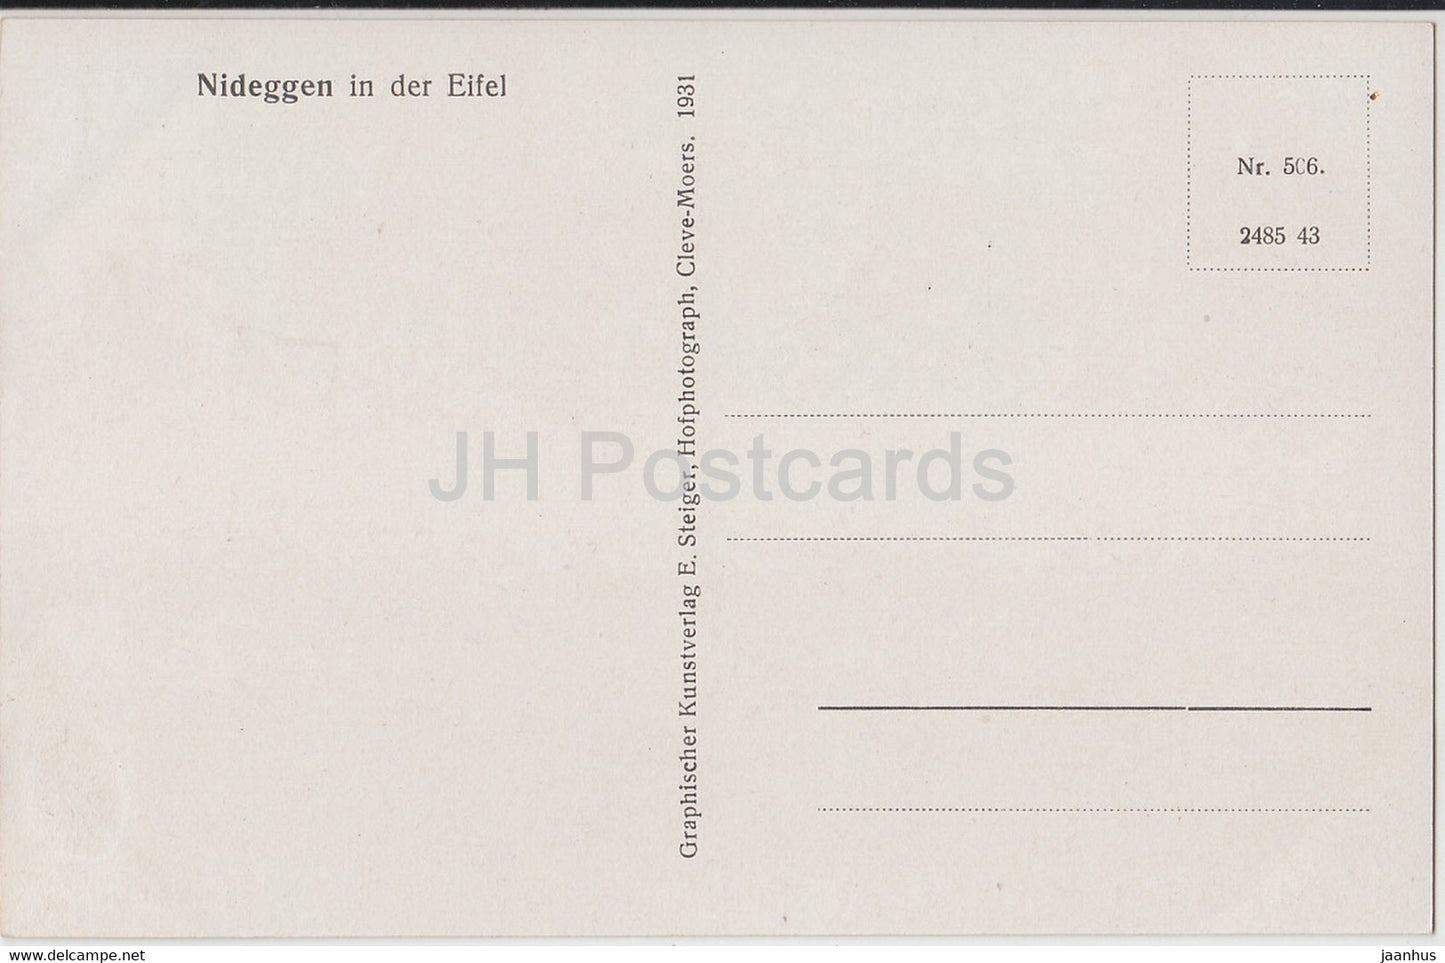 Nideggen in der Eifel - old postcard - 1931 - Germany - unused